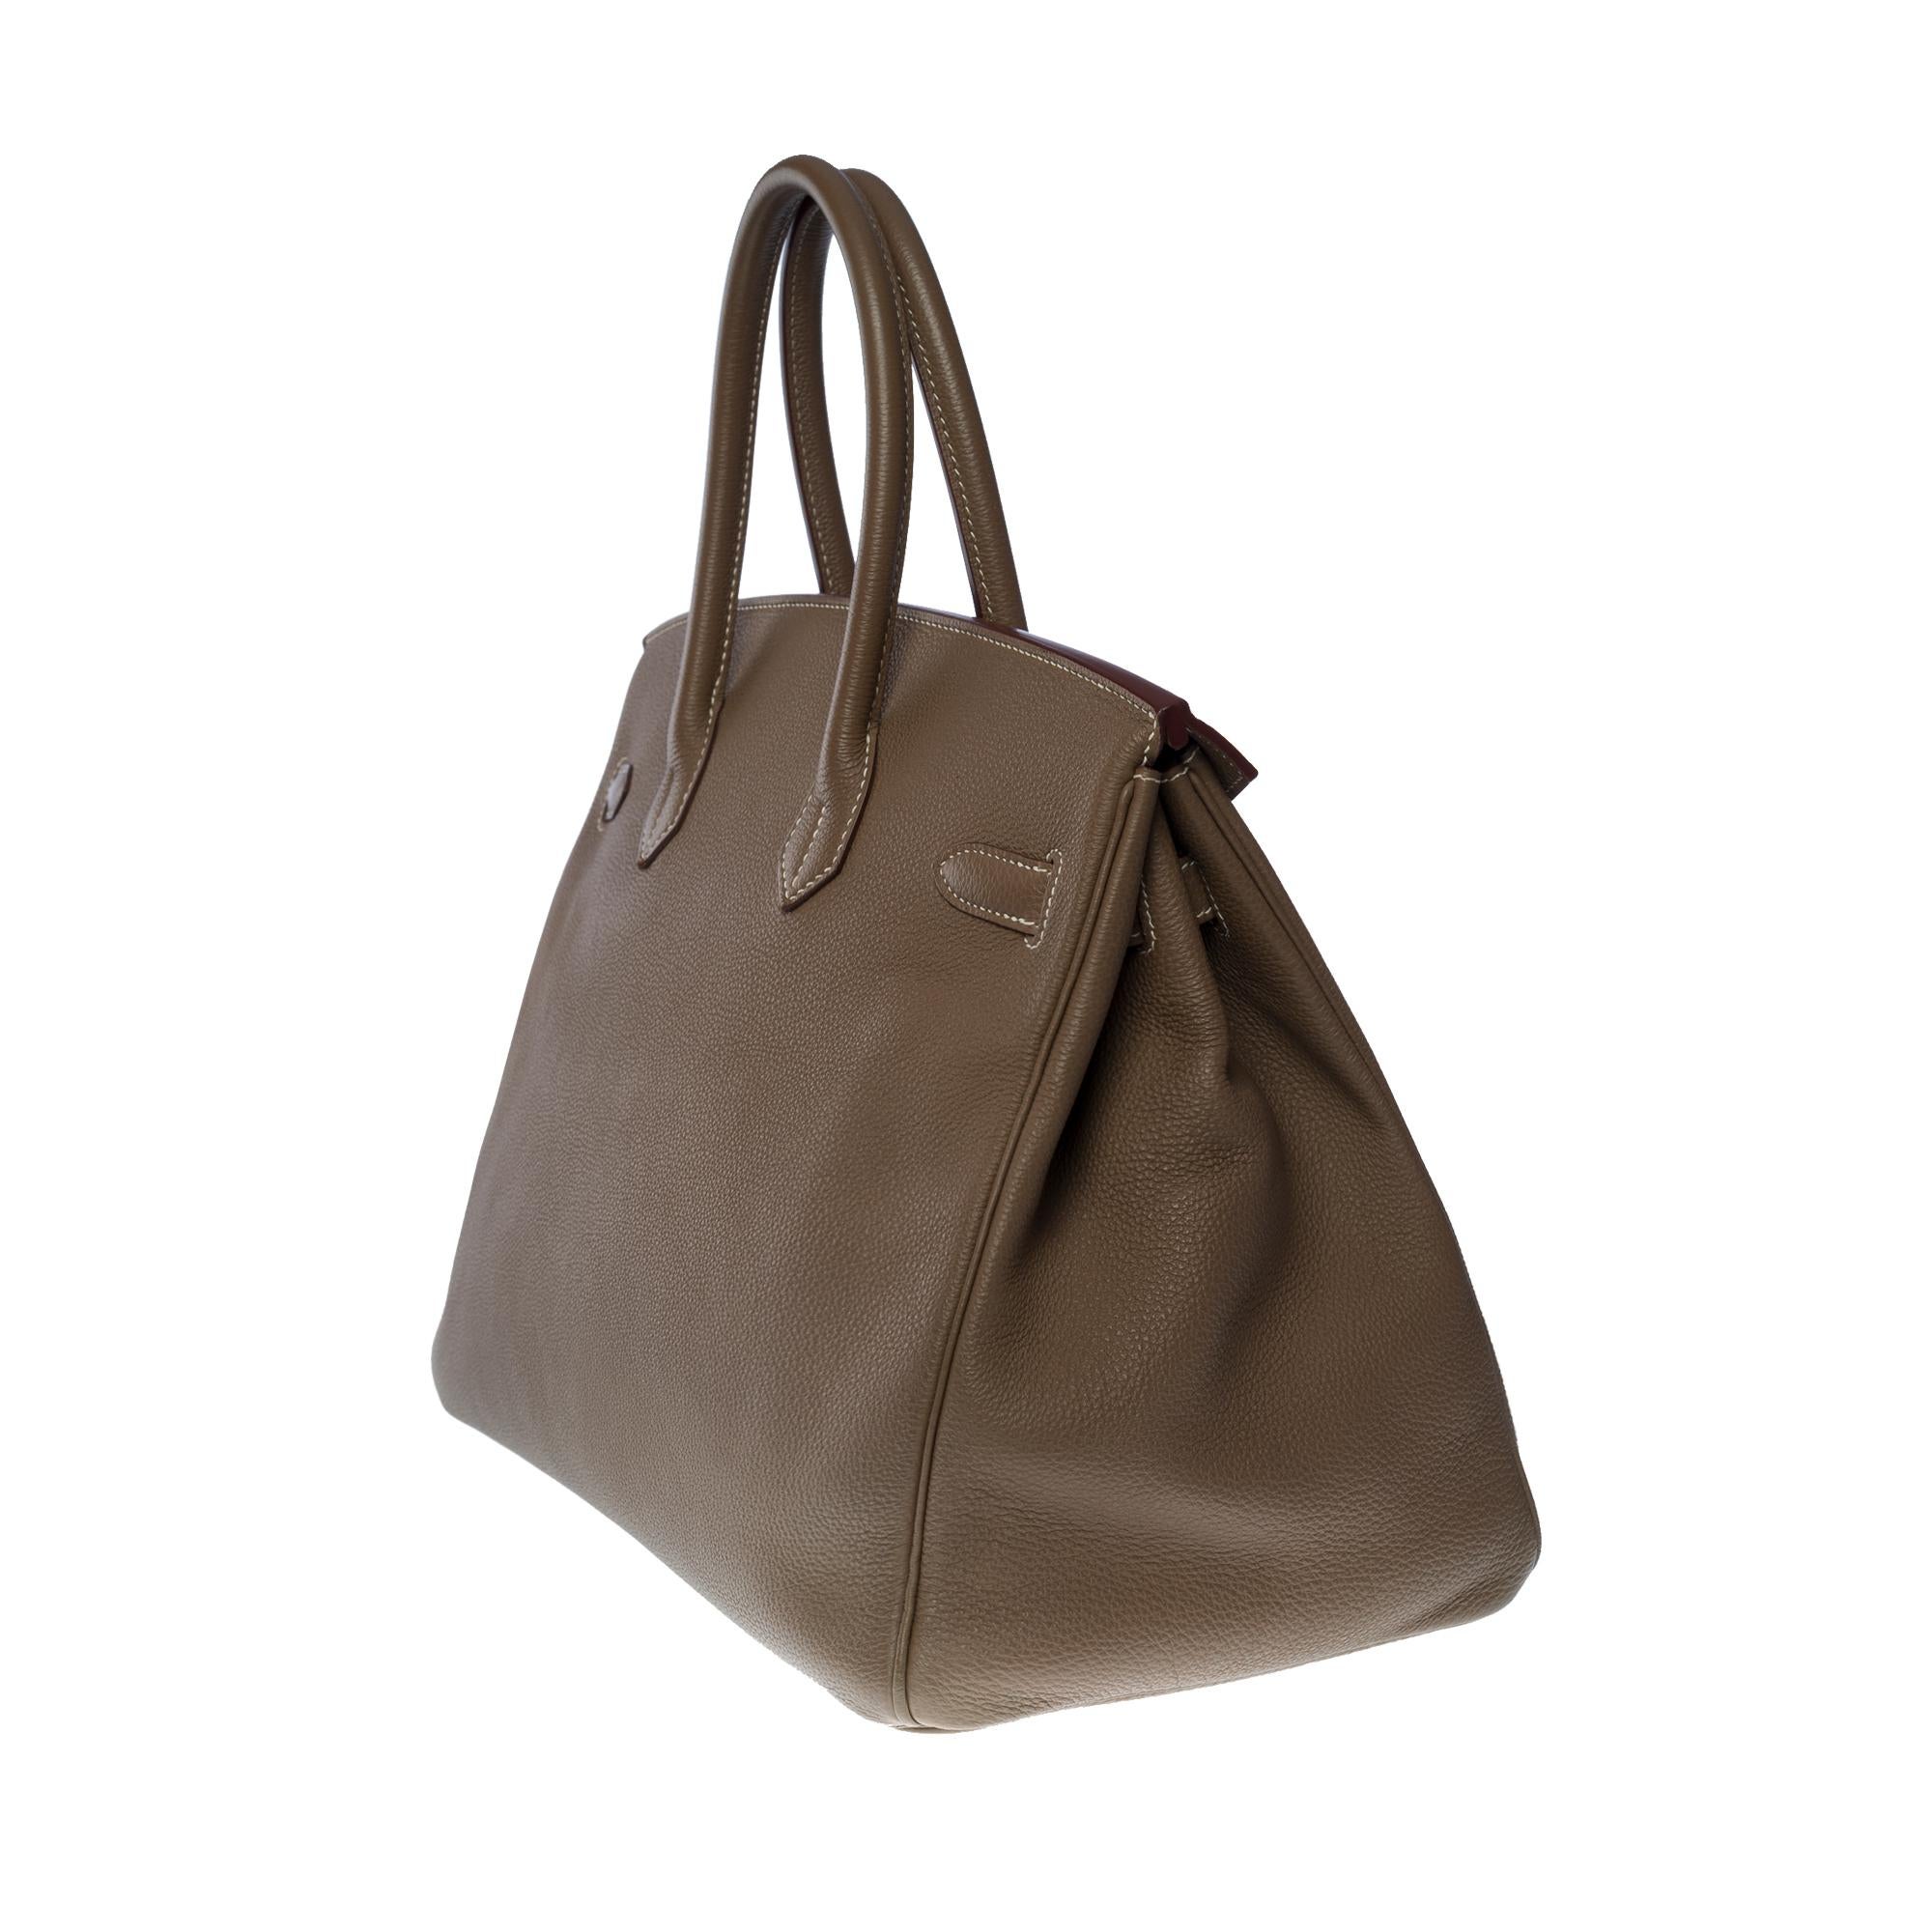 Women's or Men's Stunning Hermès Birkin 35 handbag in etoupe Togo leather, SHW